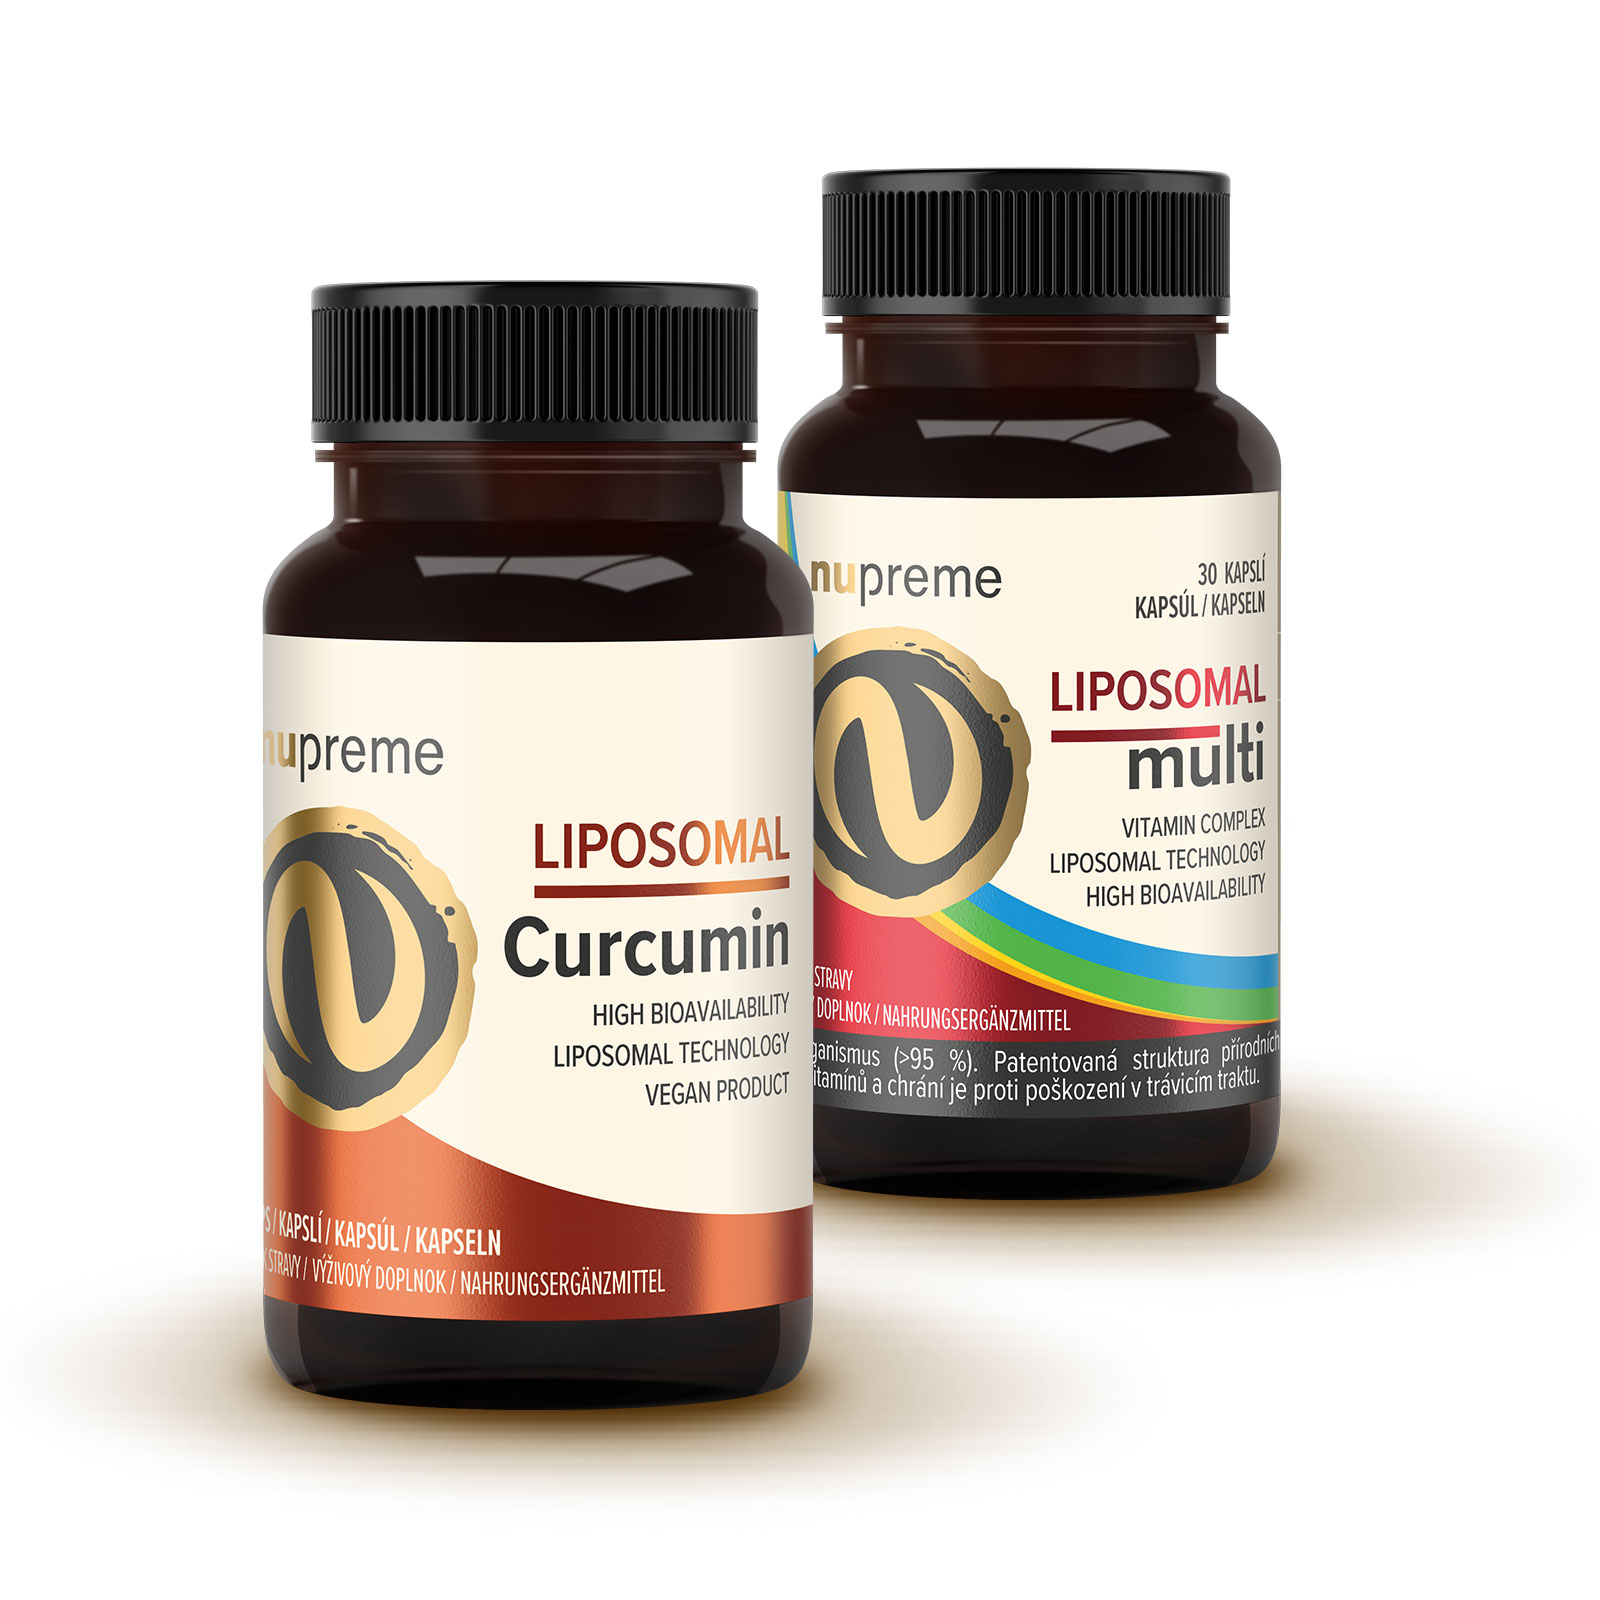 Zobrazit detail výrobku Nupreme Liposomal Curcumin + Liposomal Multi 2 x 30 kapslí